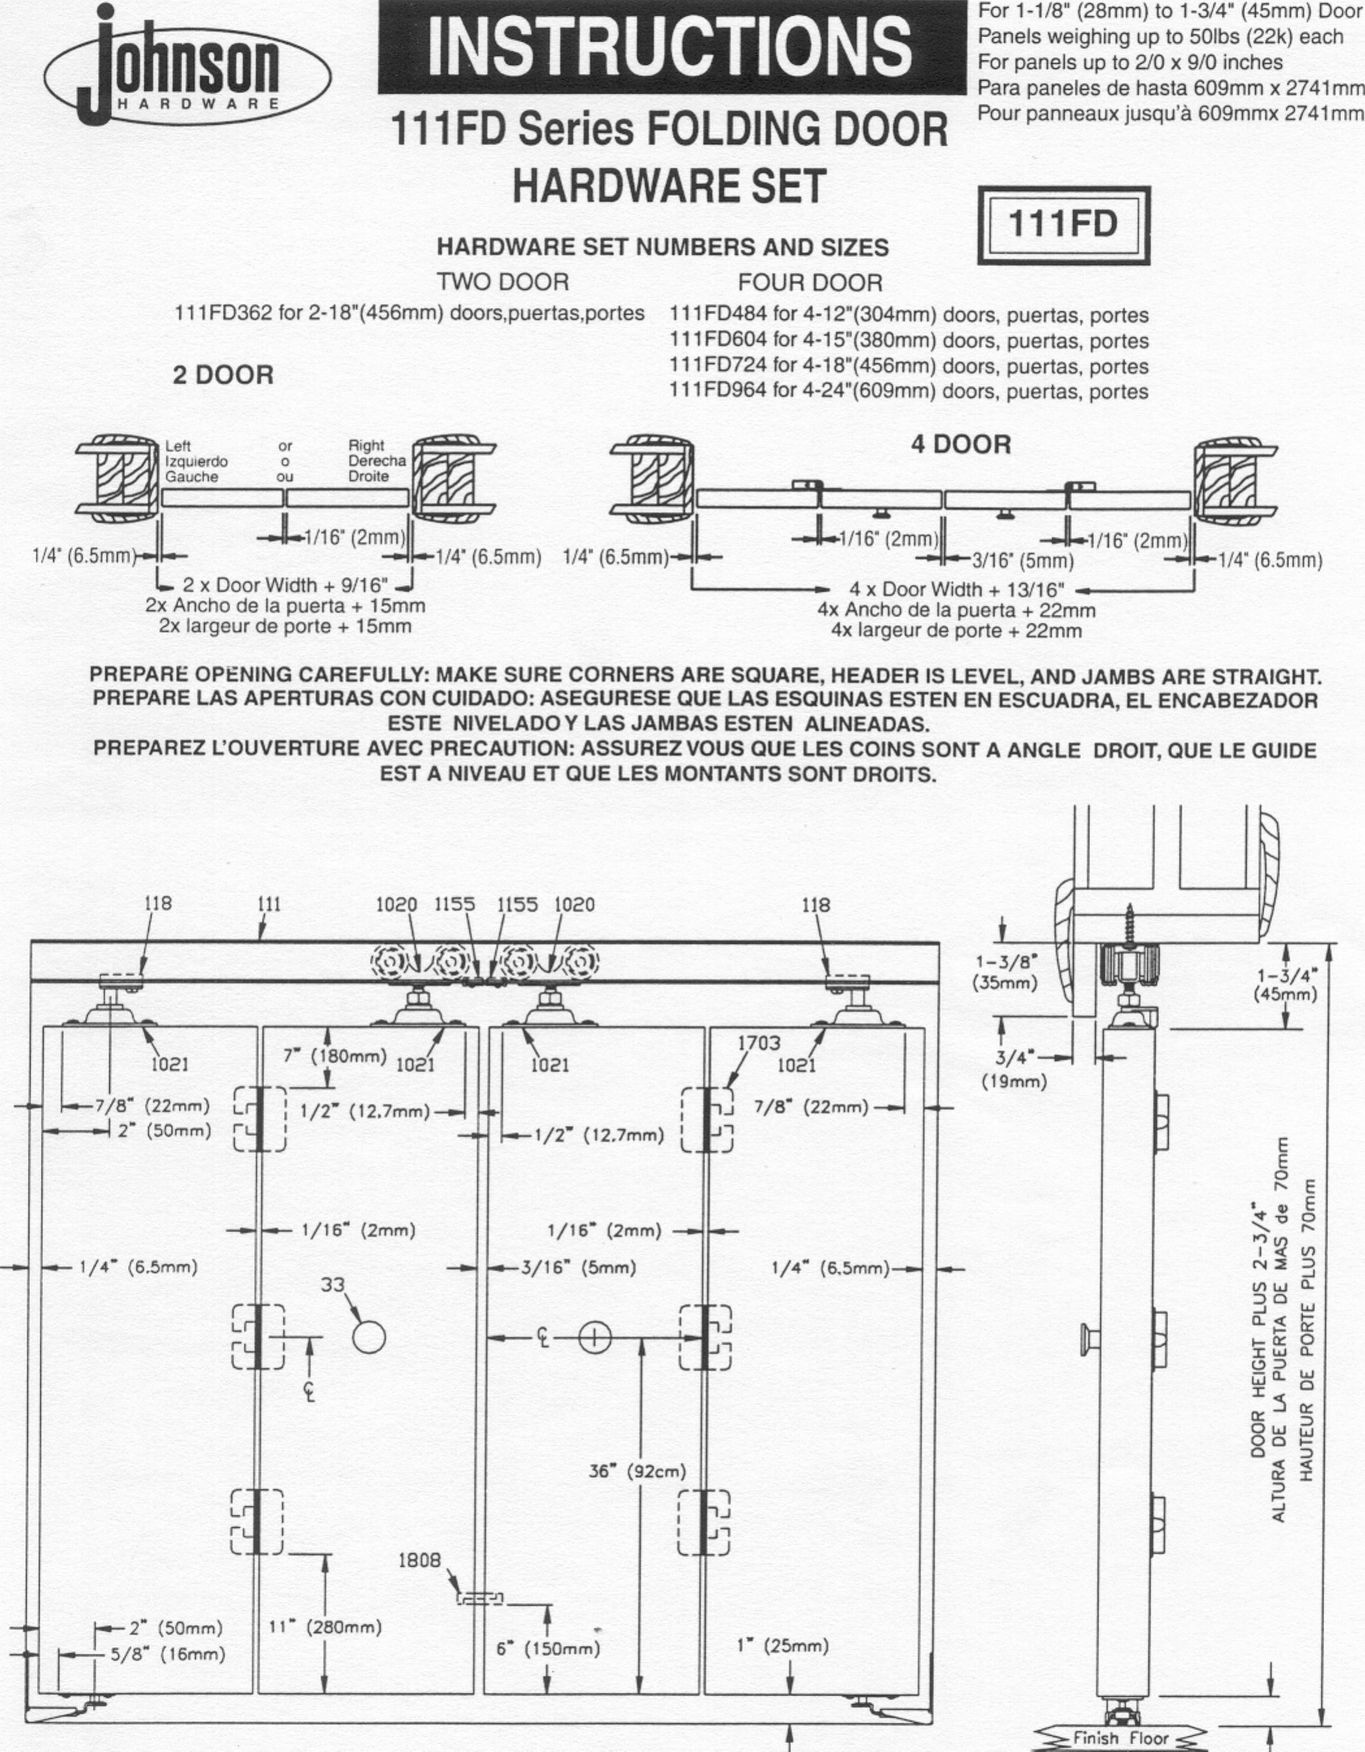 Johnson Hardware 111FD724 Door User Manual